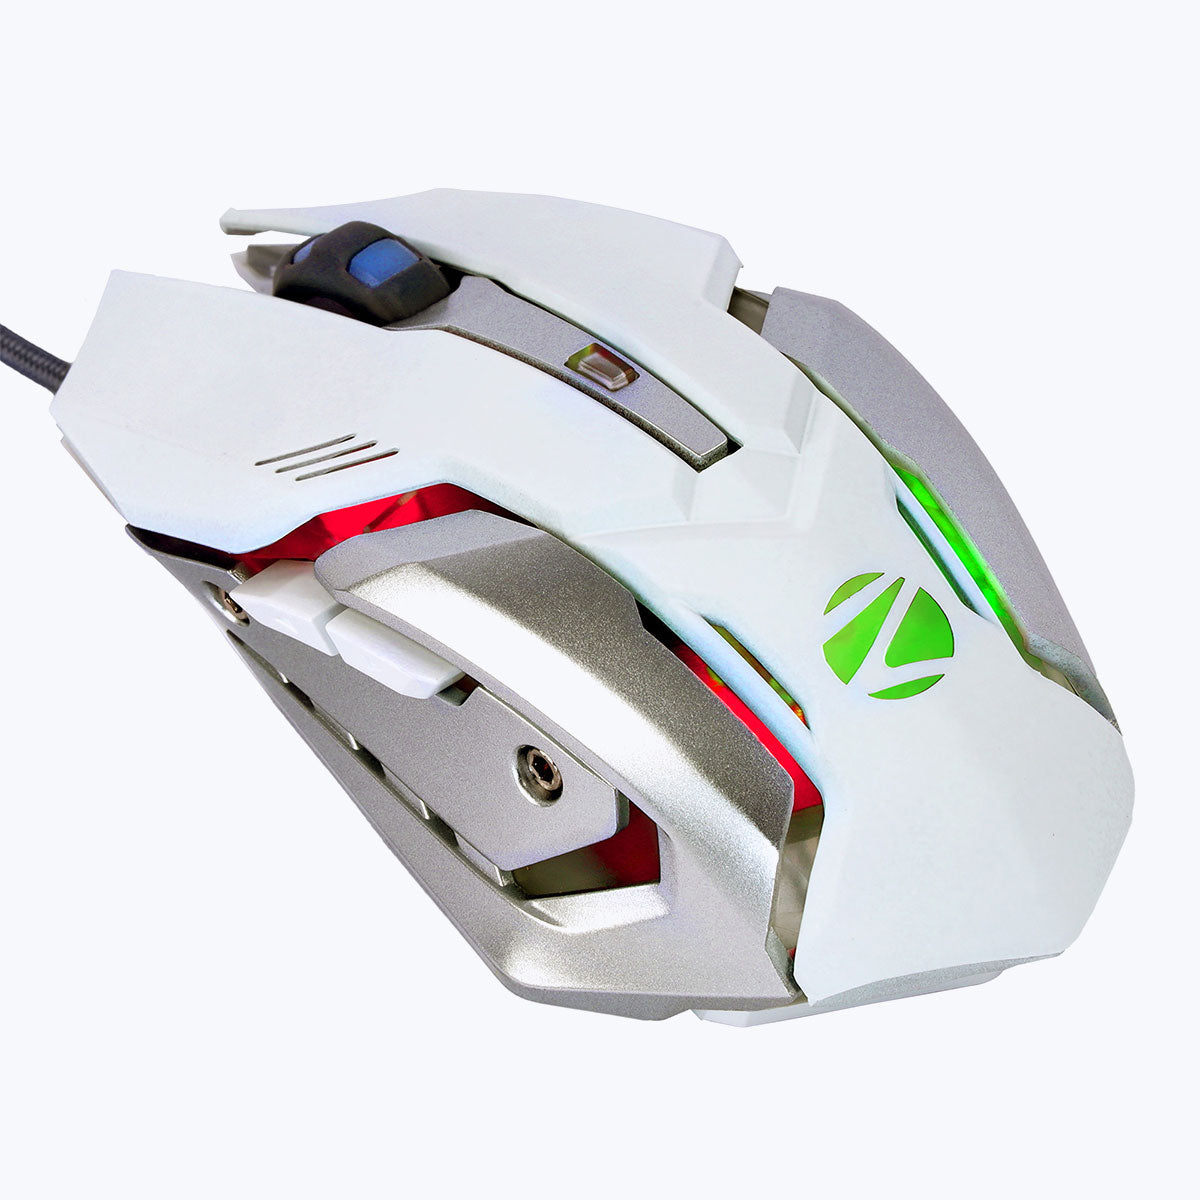 Zeb-Optimus - Keyboard and mouse combo - Zebronics